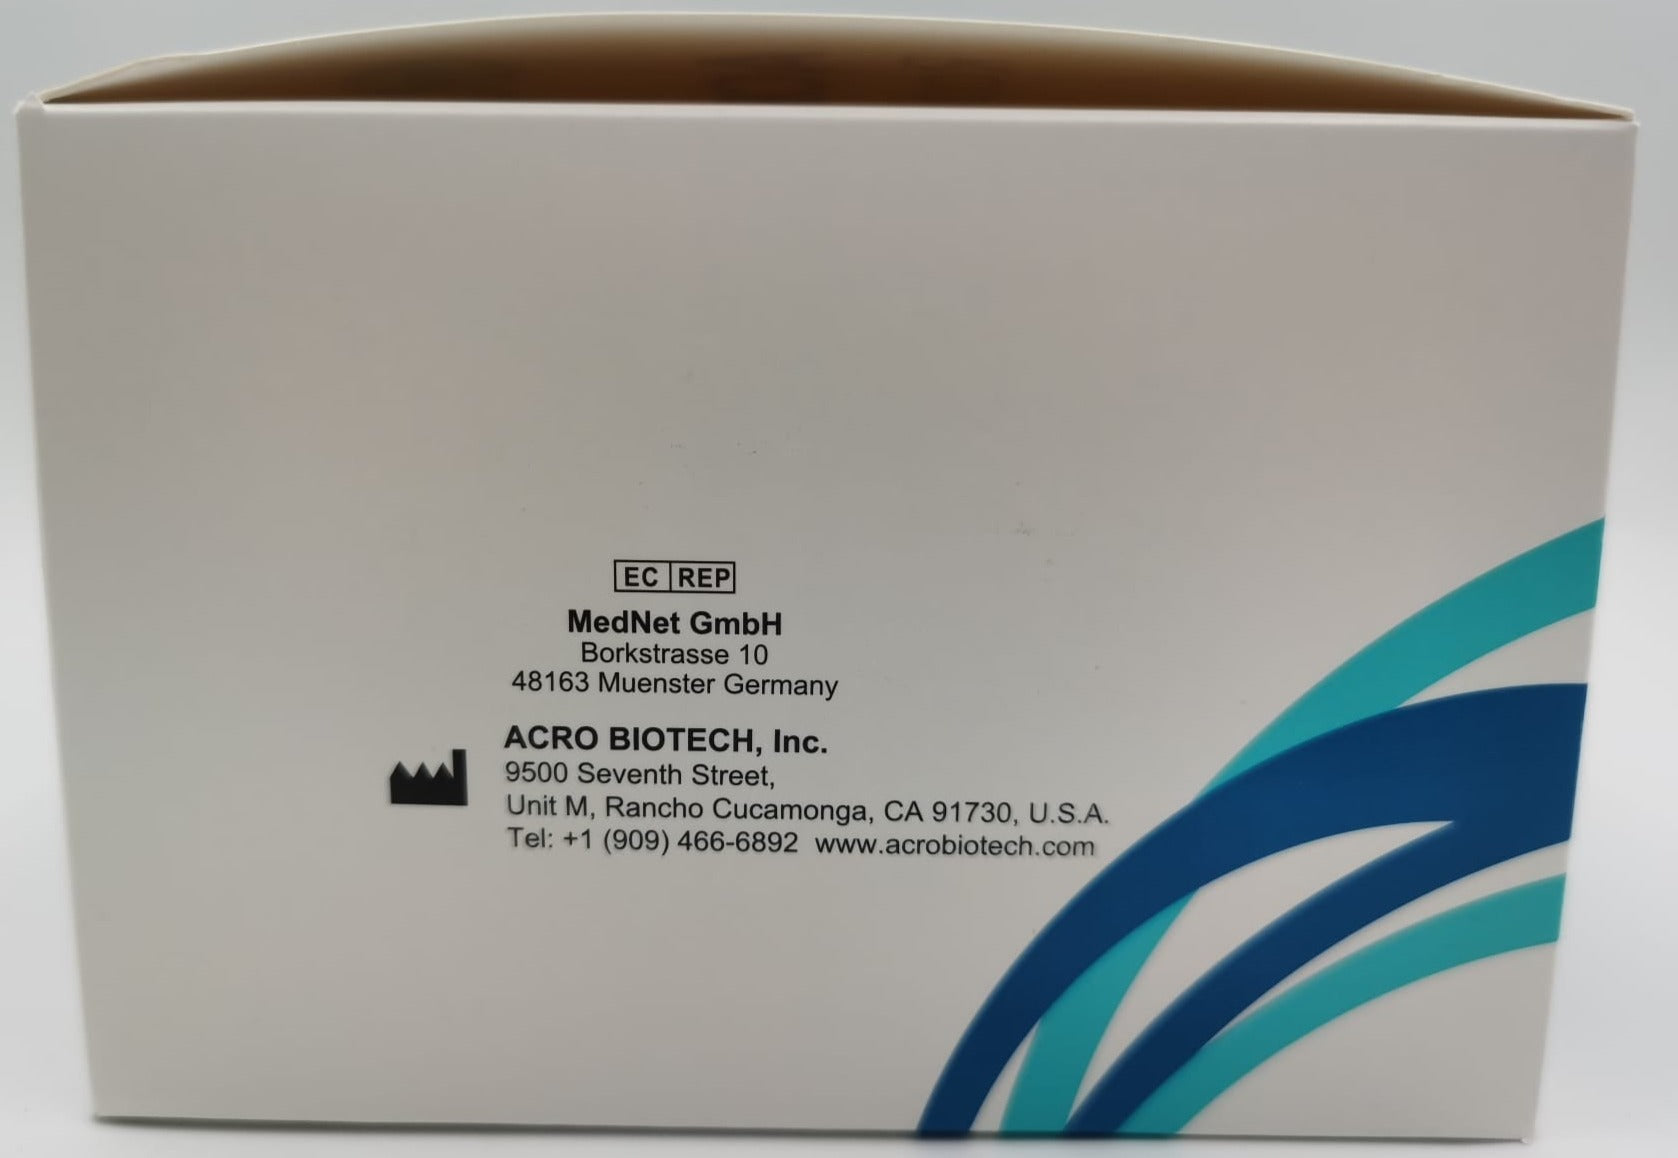 US ACRO COVID-19 Rapid Test (Oral Fluid) - 20 Kits Pack 2019新冠病毒快速測試劑 (深喉唾液) 20 測試套裝